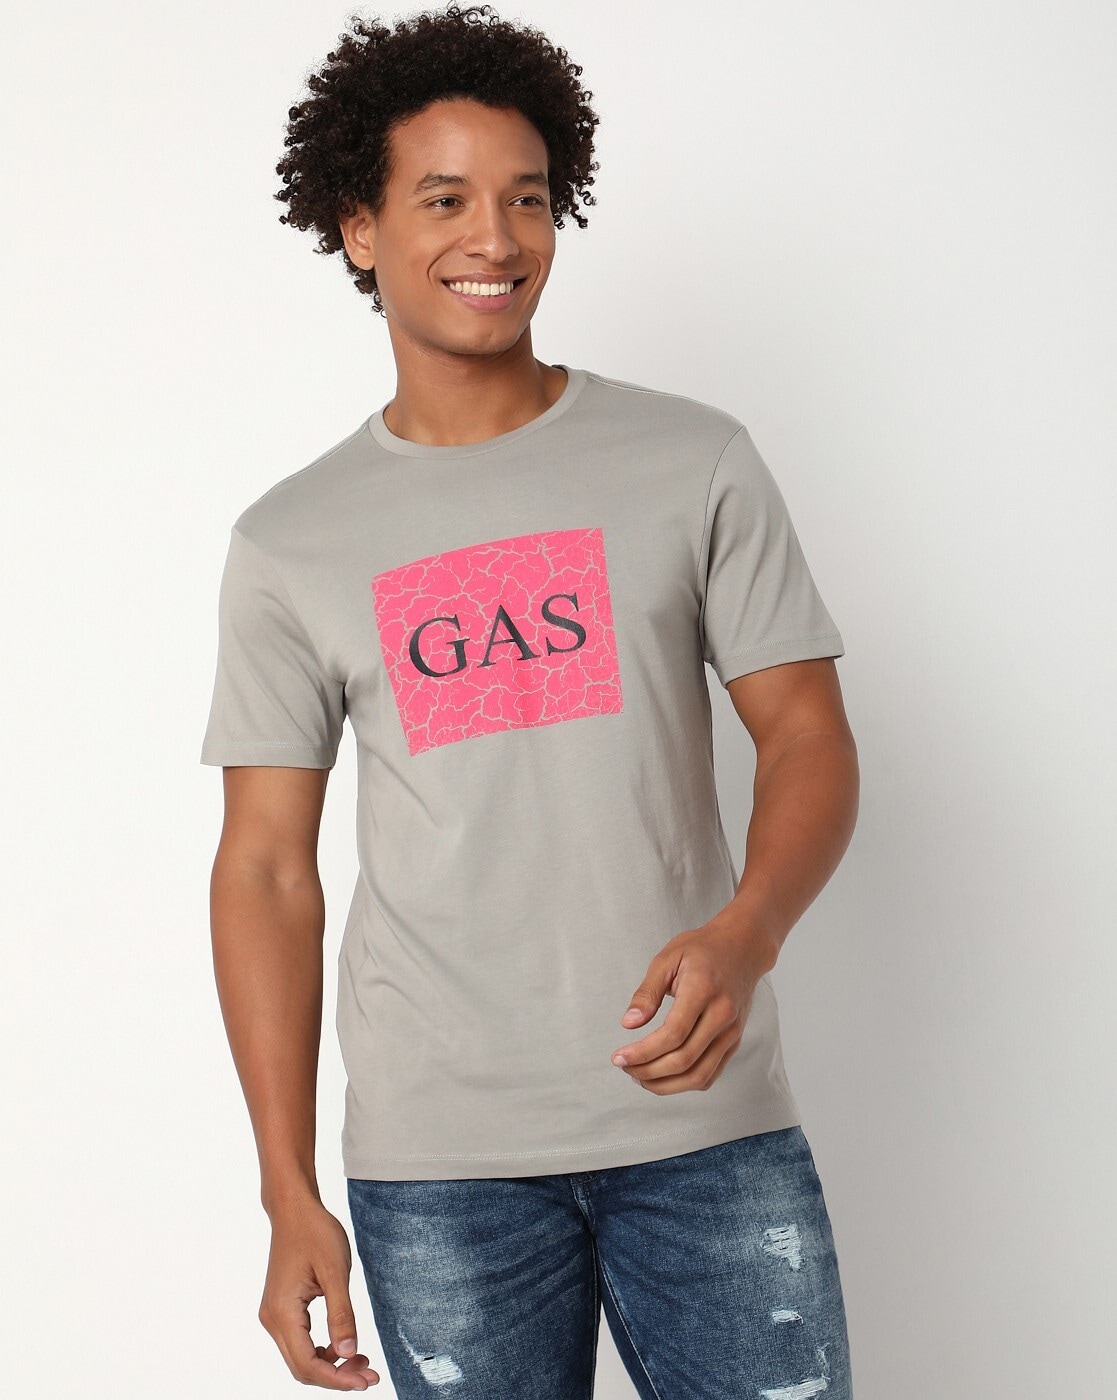 Aggregate 197+ gas jeans t shirt super hot